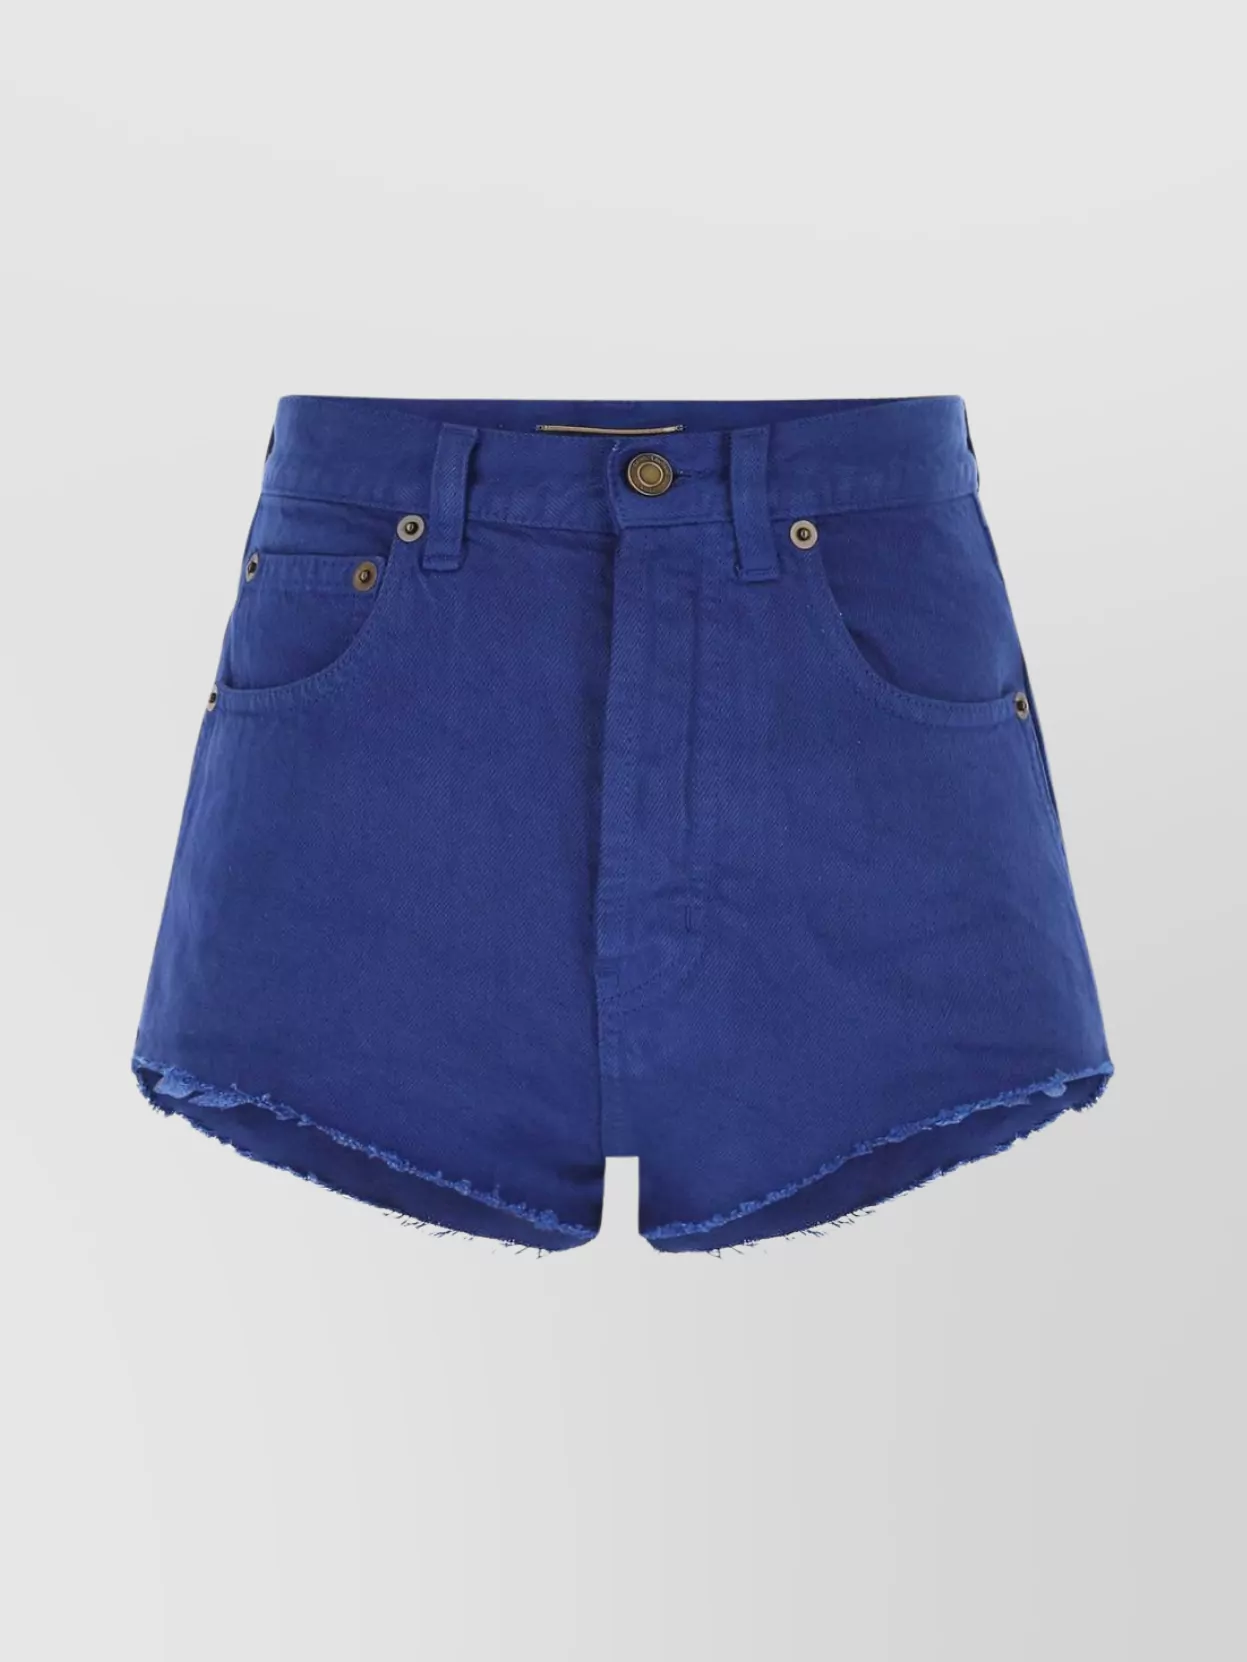 Shop Saint Laurent Denim Shorts With Frayed Hem And Belt Loops In Blue